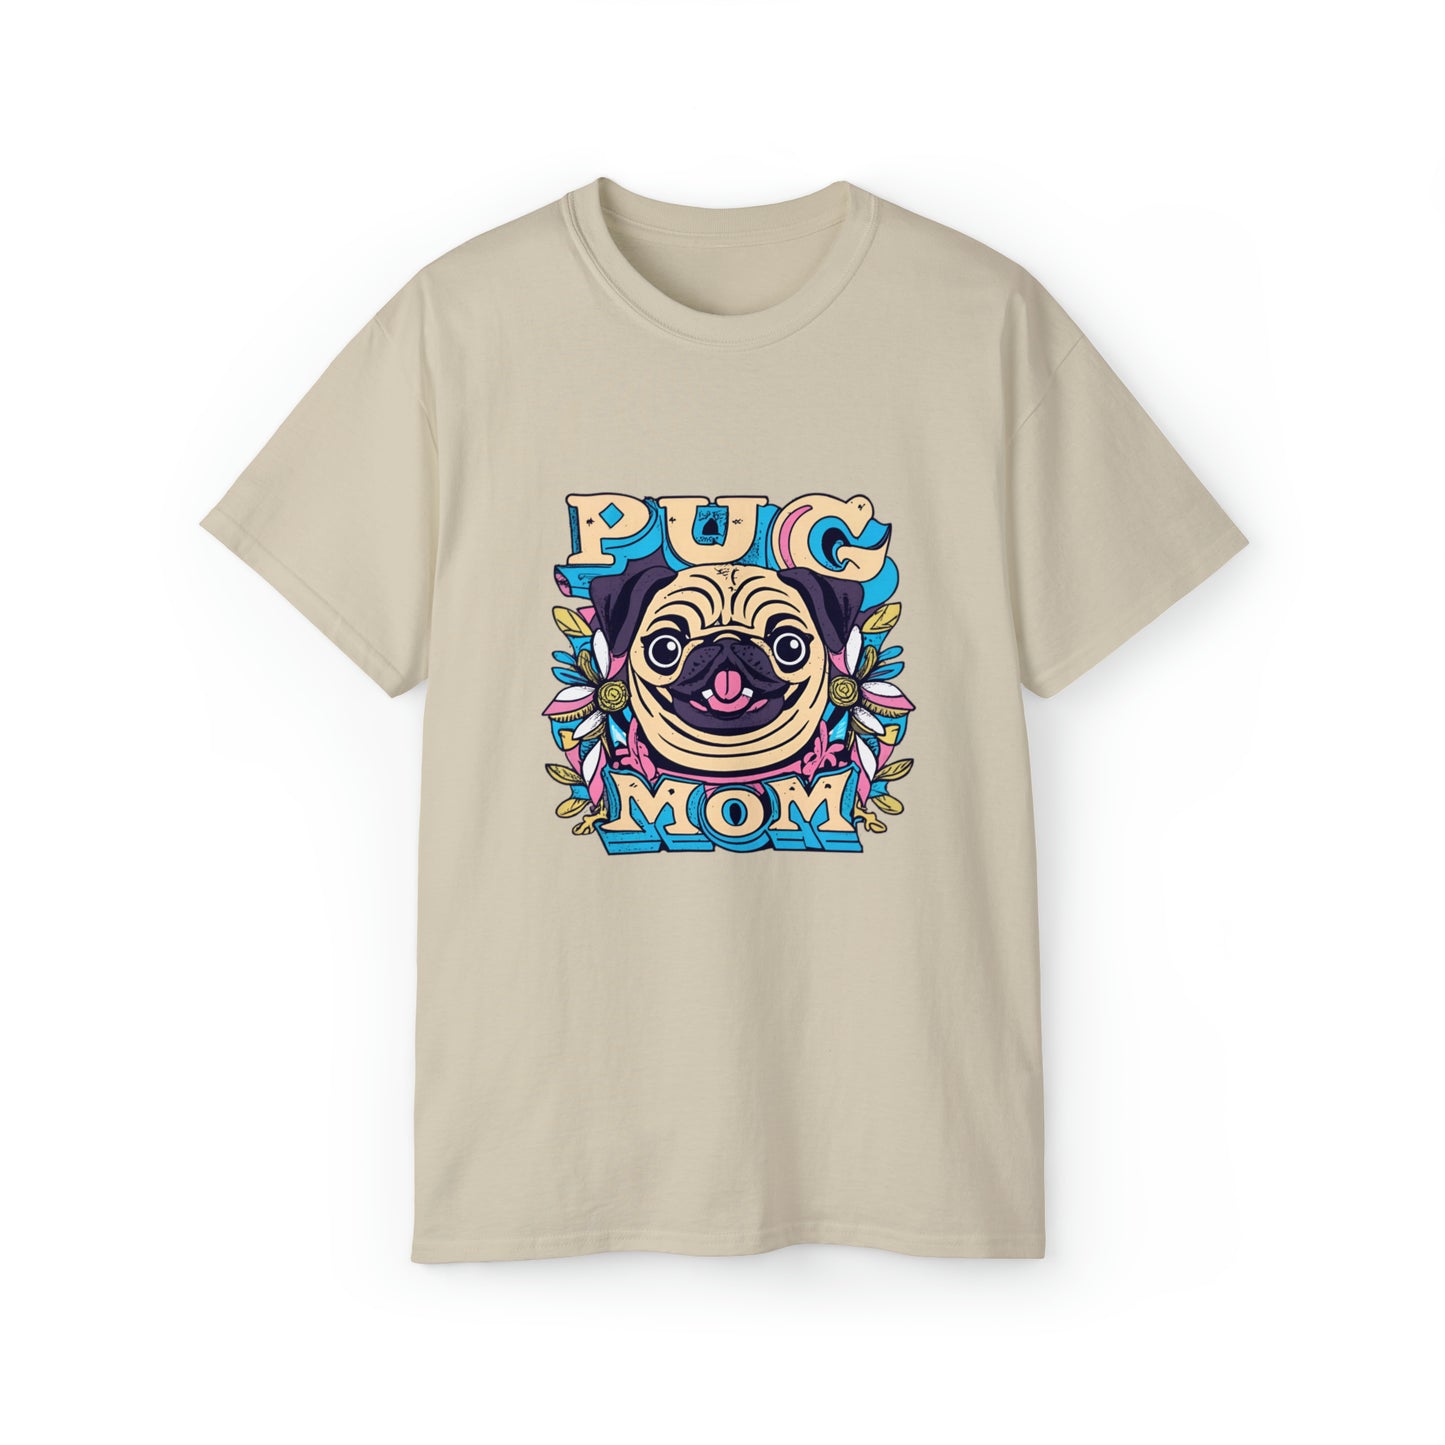 Pug Mom Shirt, Unisex Women's Shirt, Pug Owner, Best Dog Mom Gift , Pug Lovers, Unisex Ultra Cotton Tee Shirt